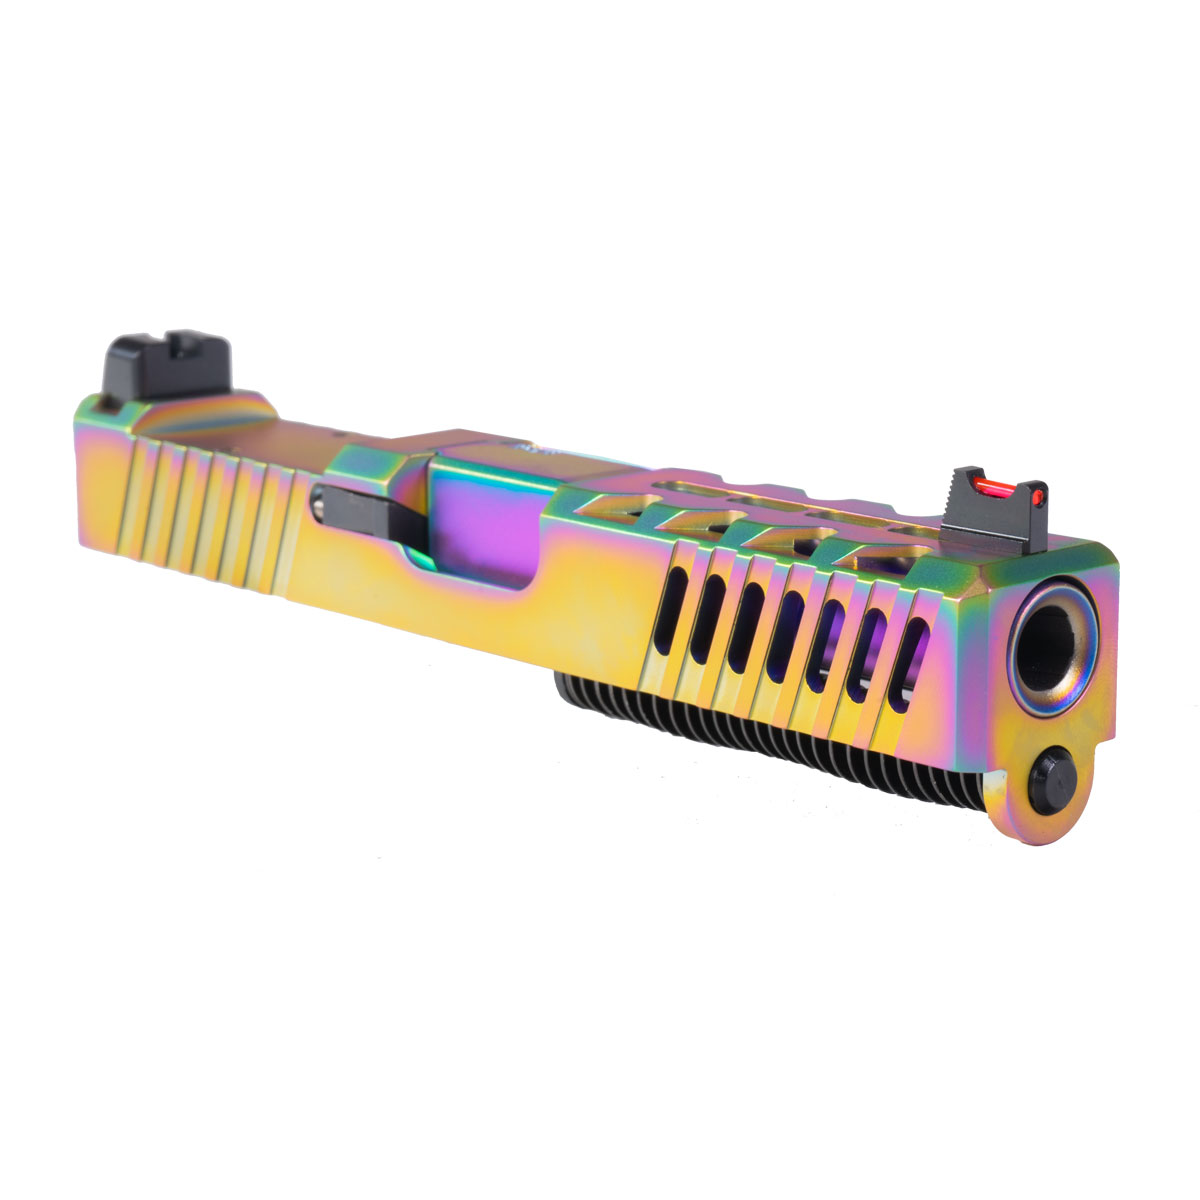 DTT 'Polychrome Pursuit' 9mm Complete Slide Kit - Glock 19 Gen 1-2 Compatible